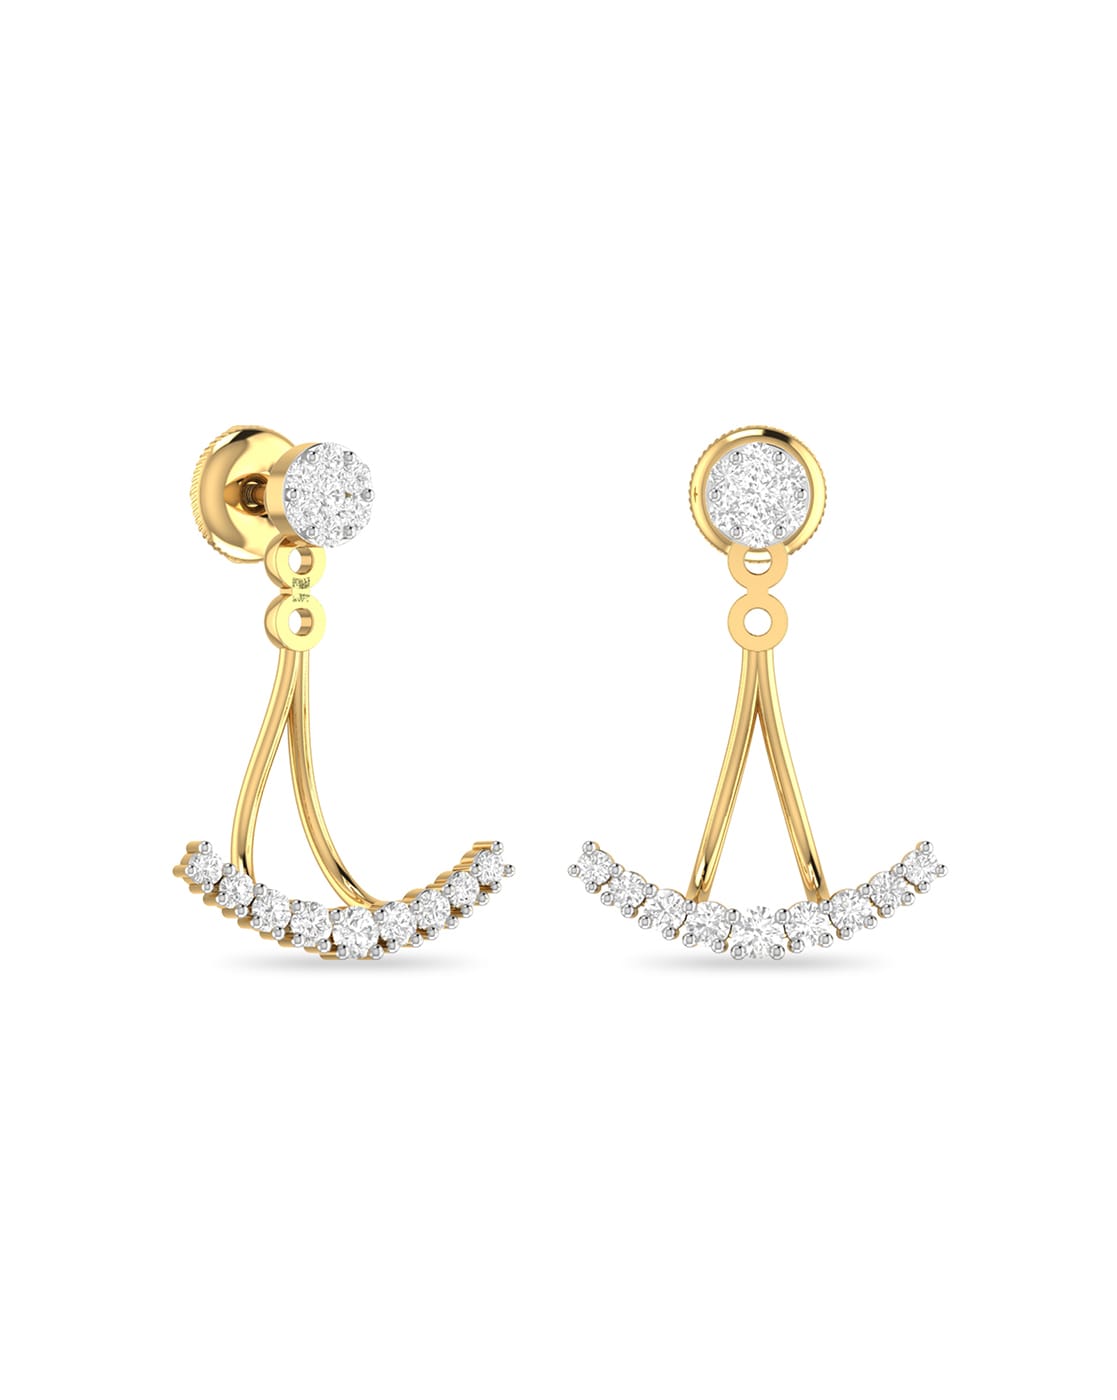 Gold  Diamond Earrings Online  Buy Latest Designs at best price  PC  Jeweller